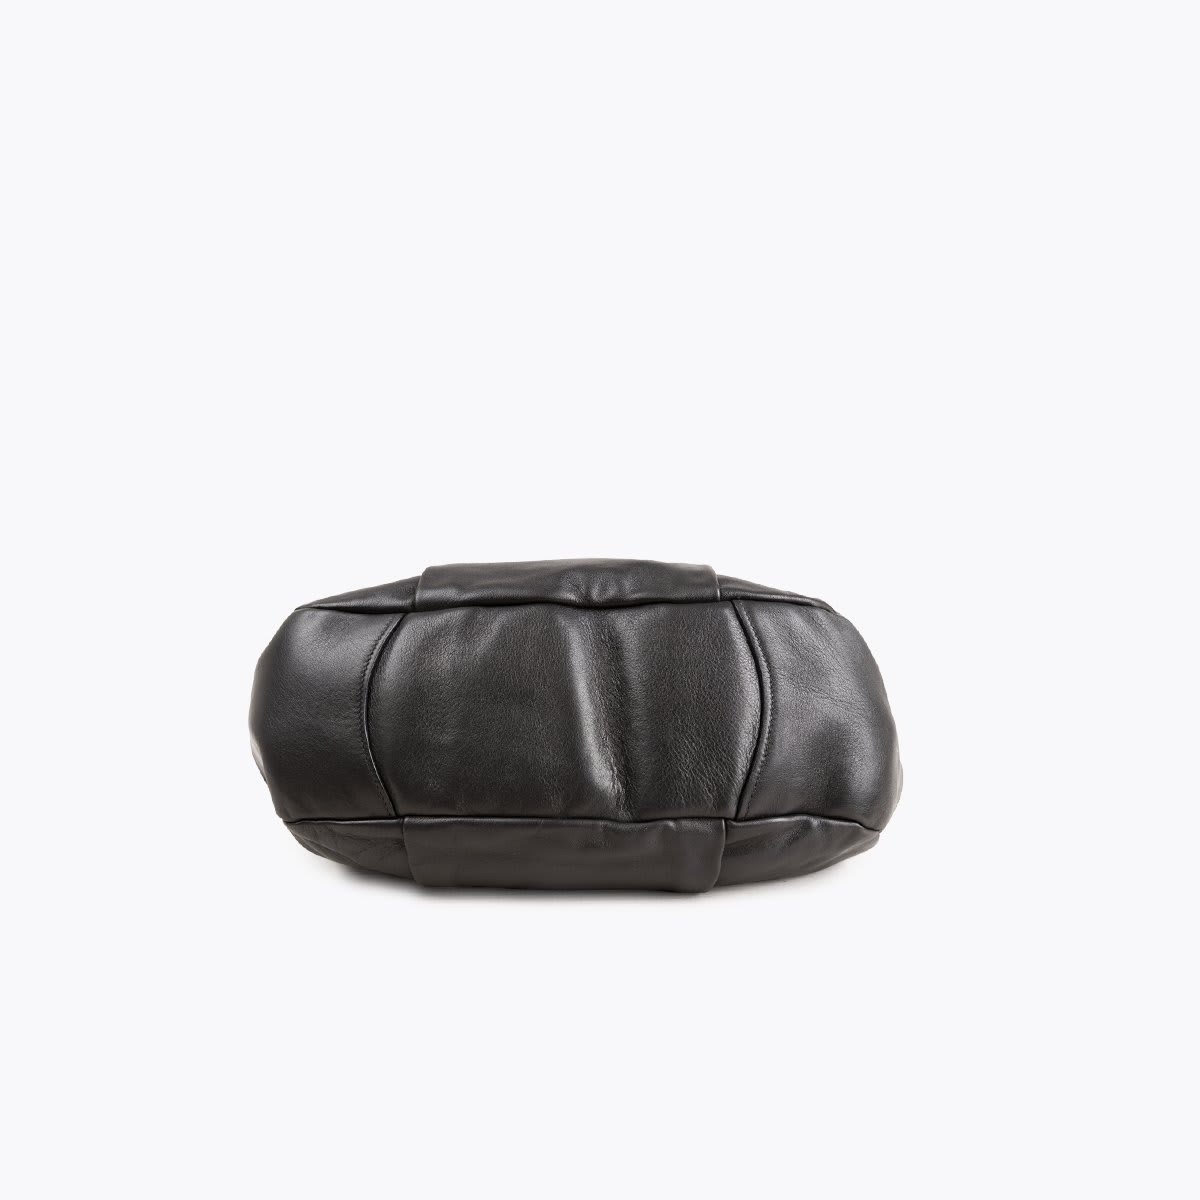 Prada Soft Leather Hobo Bag